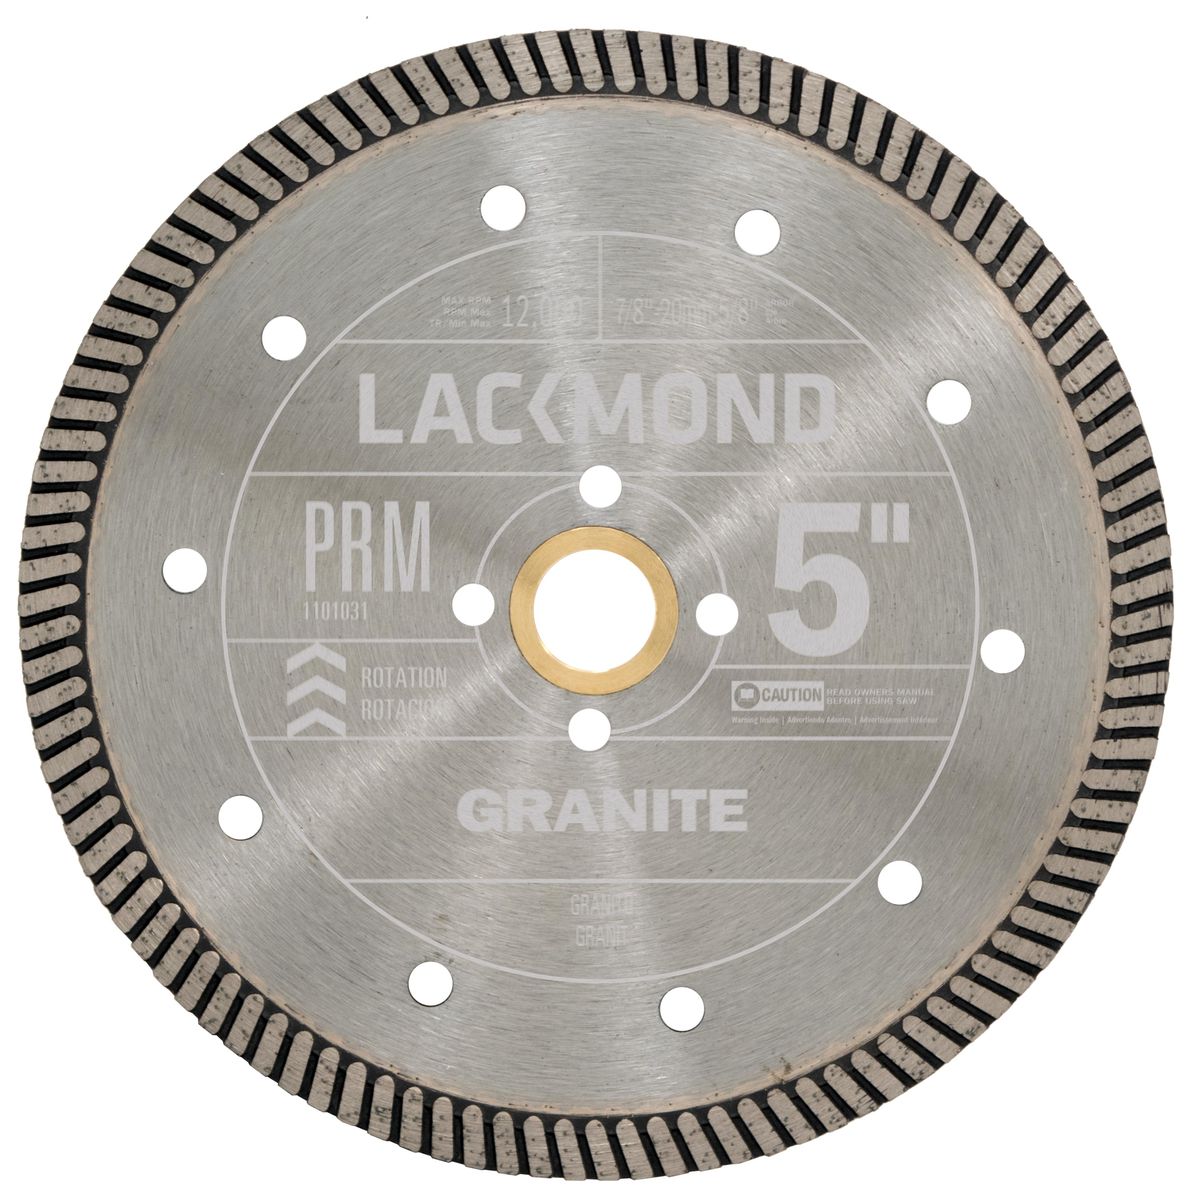 PRM Series Granite Turbo blade by Lackmond Stone